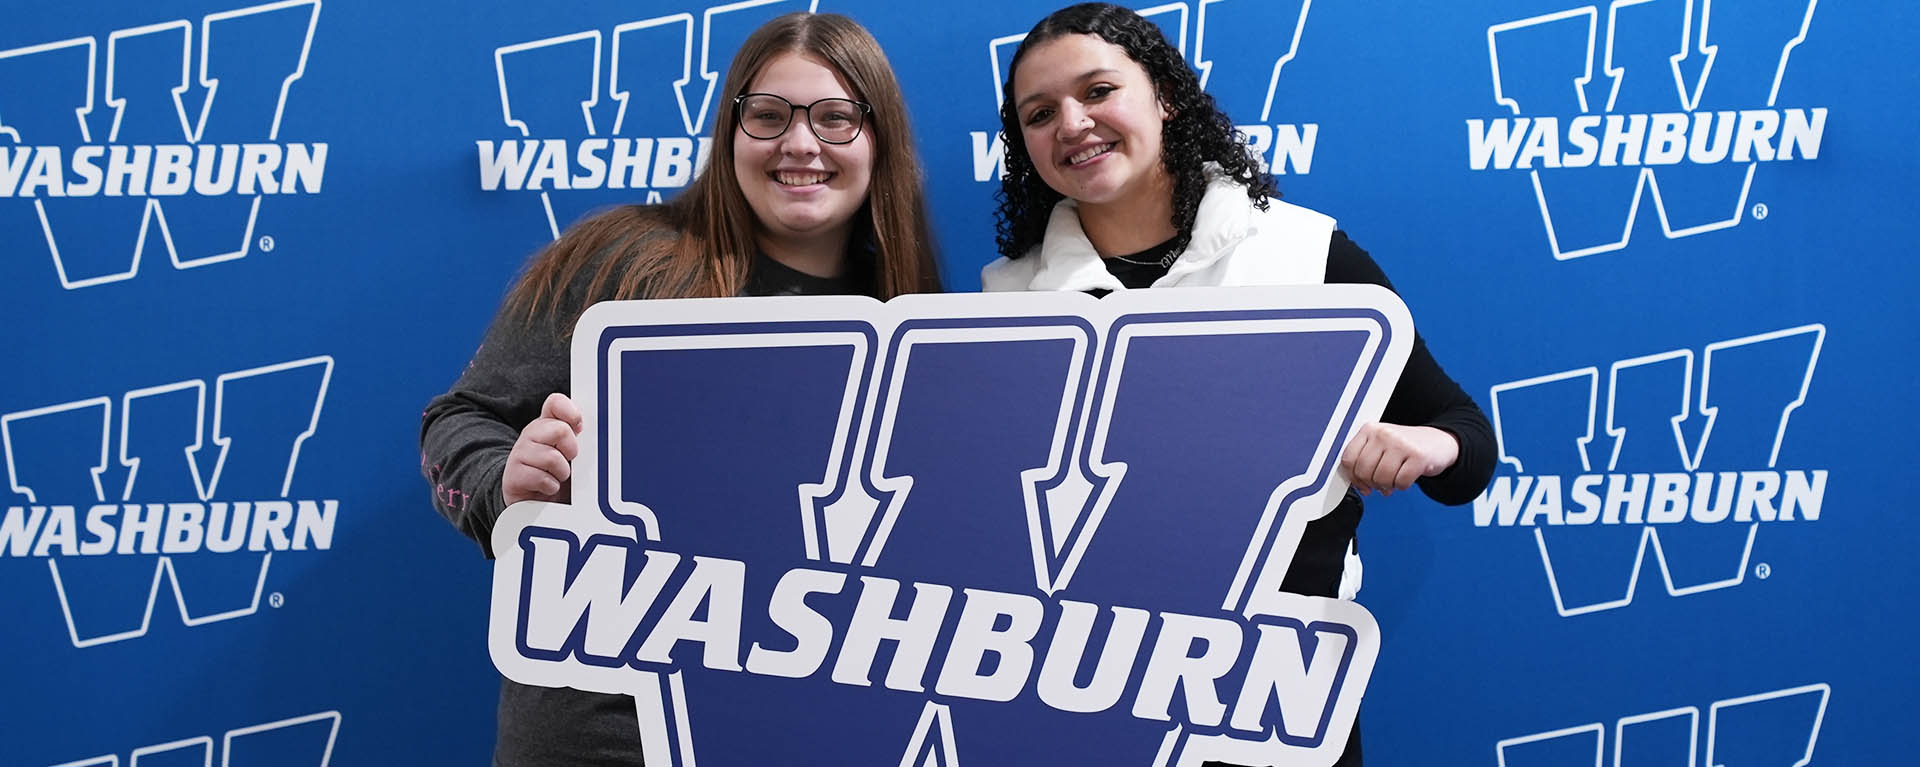 High school seniors holding a Washburn sign at Ichabod Day.